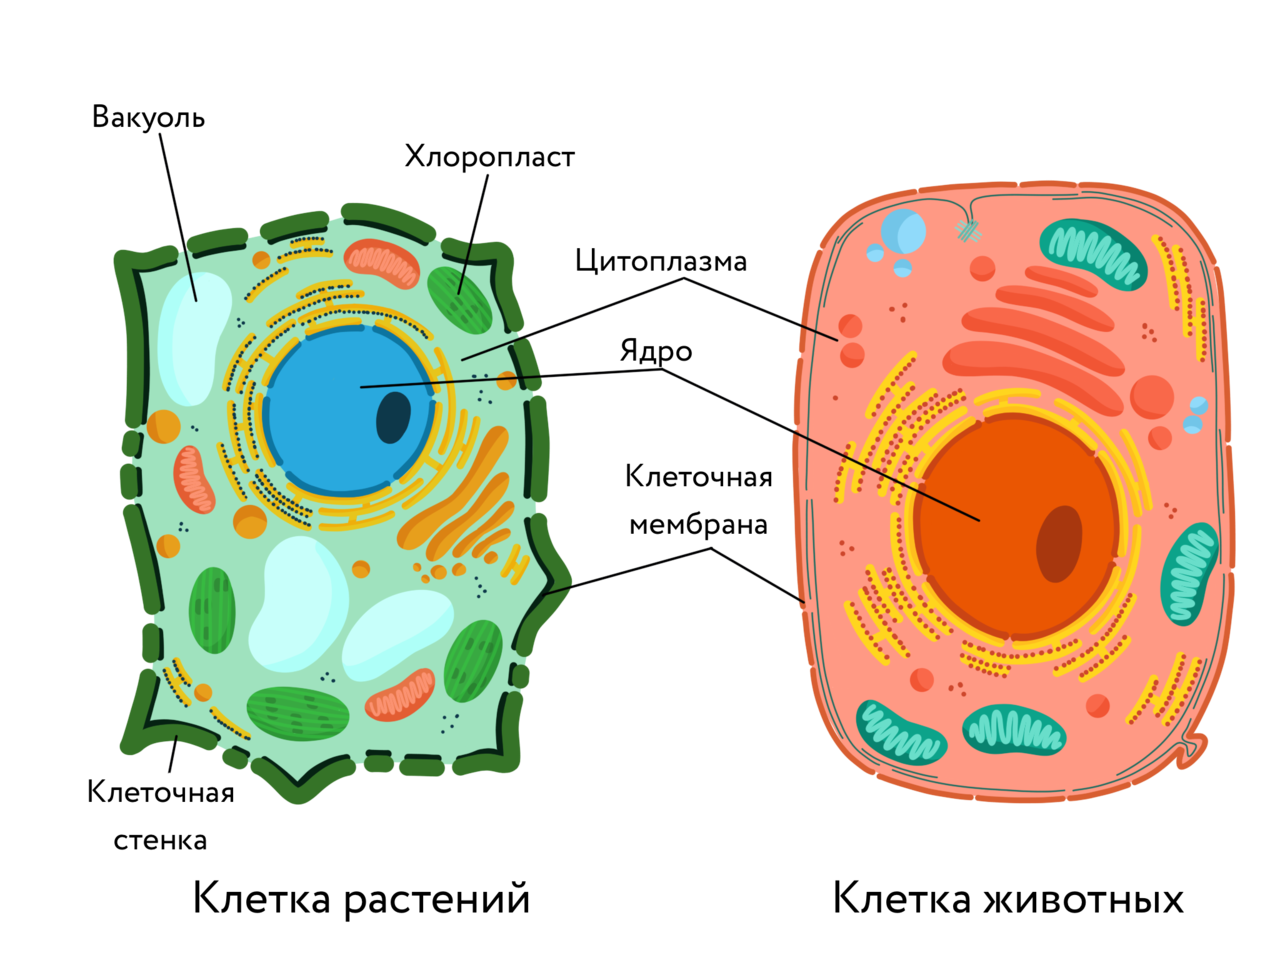 раст клетка в отличие от животной имеет фото 1